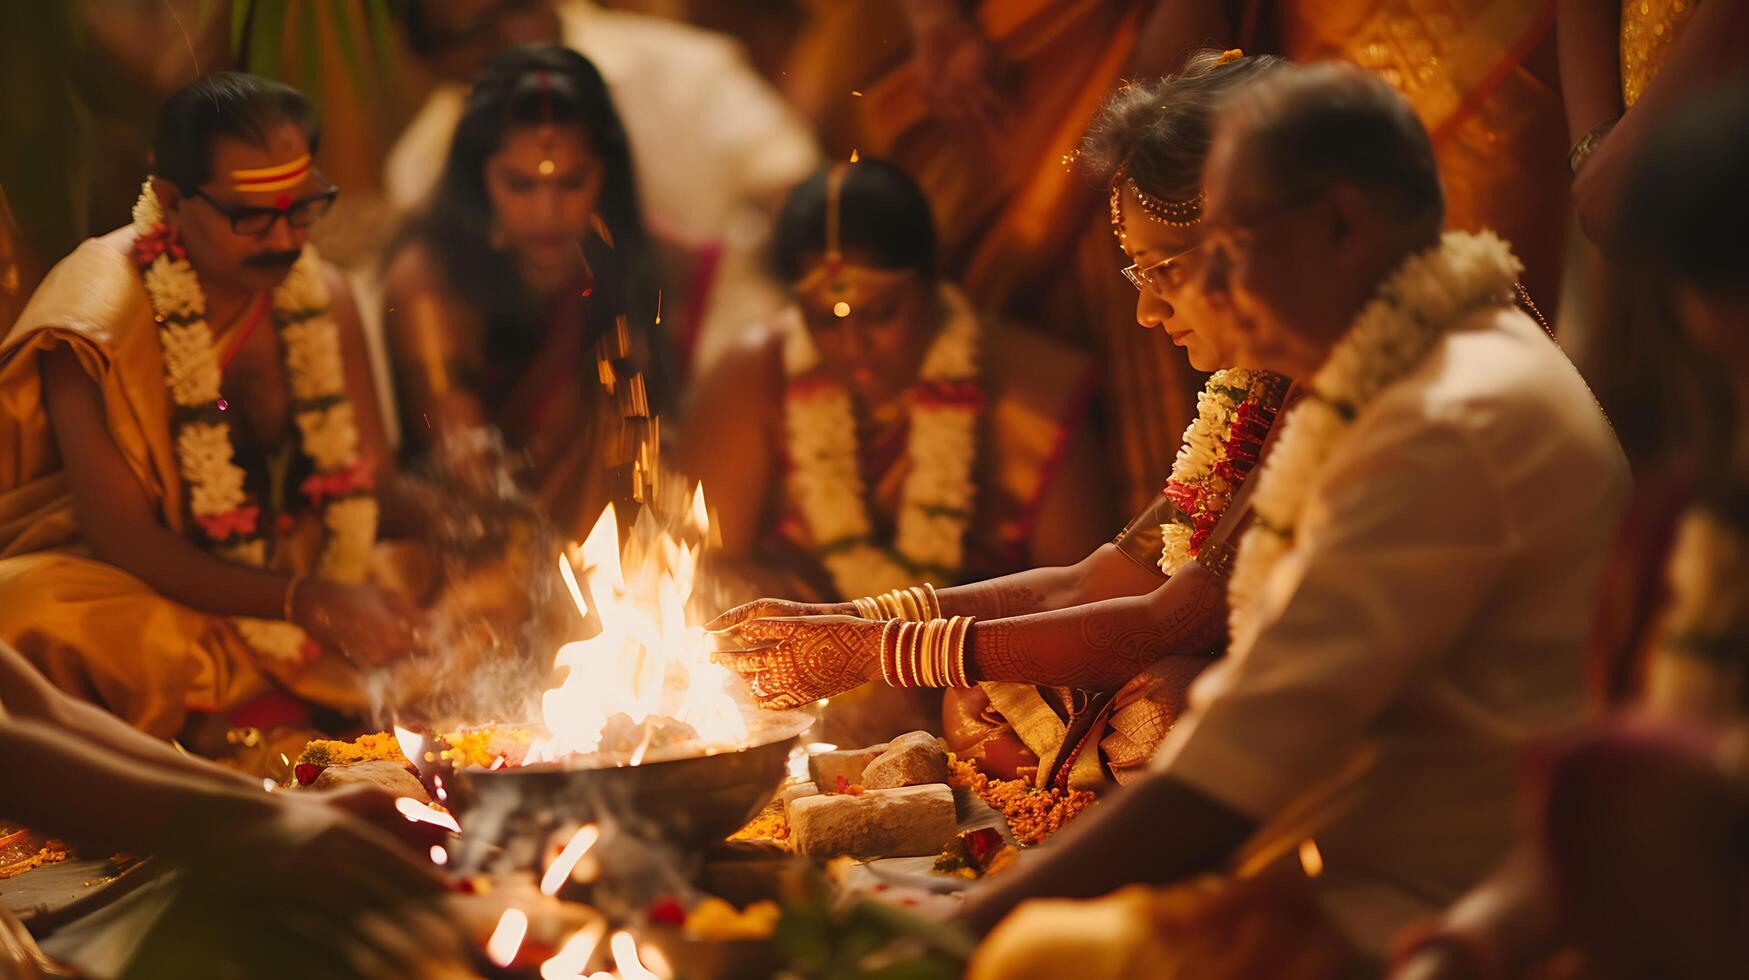 ai gegenereerd traditioneel Hindoe bruiloft bruid bruidegom familie en priester uitvoeren heilig brand rituelen in traditioneel kleding foto